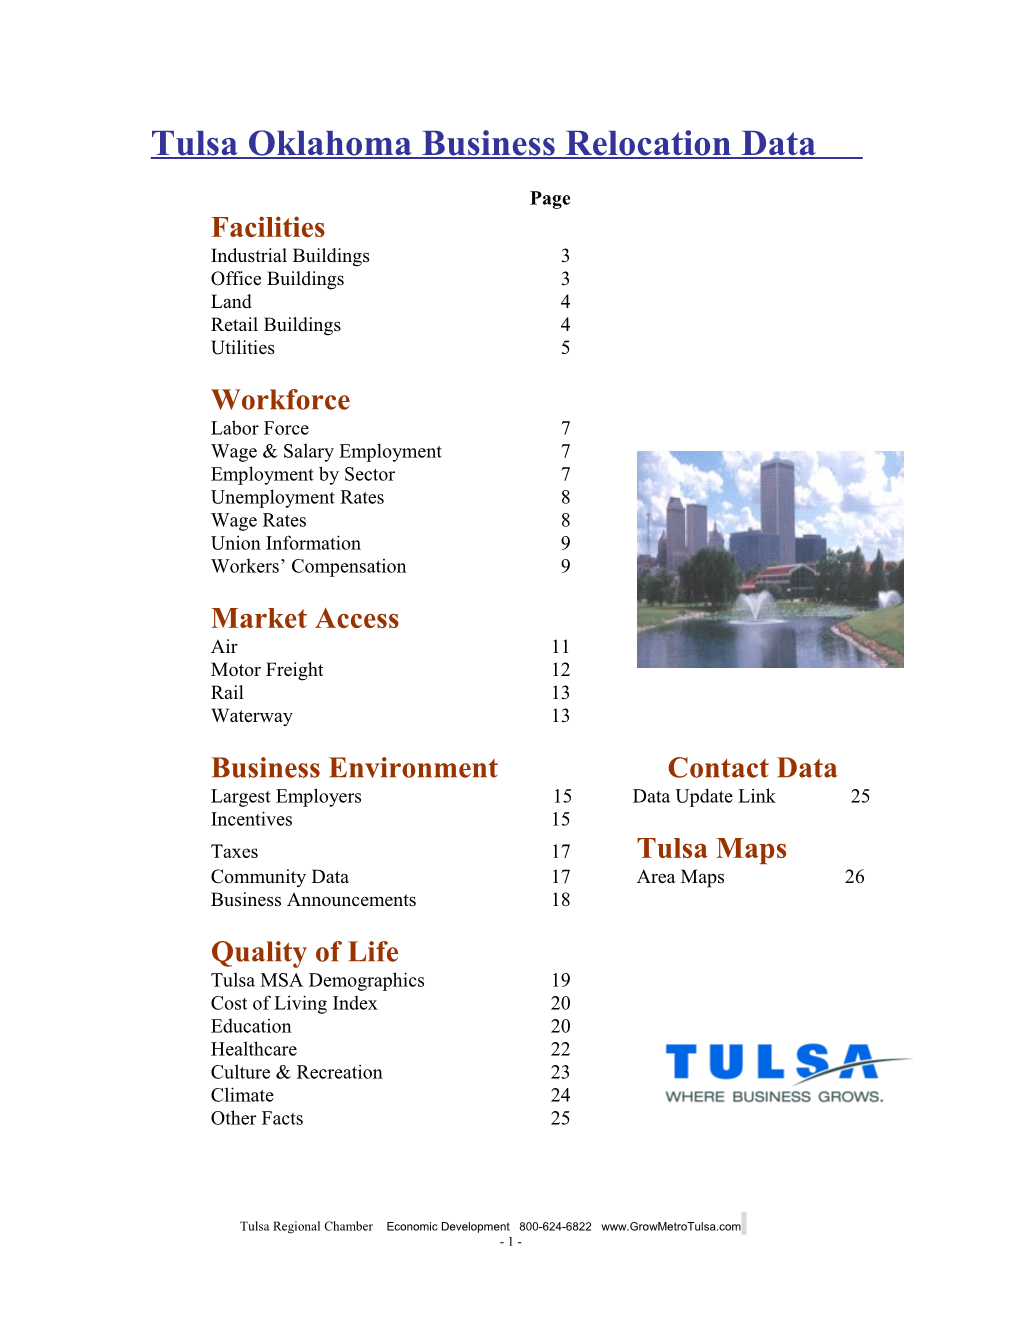 Tulsa Business Relocation Data s1